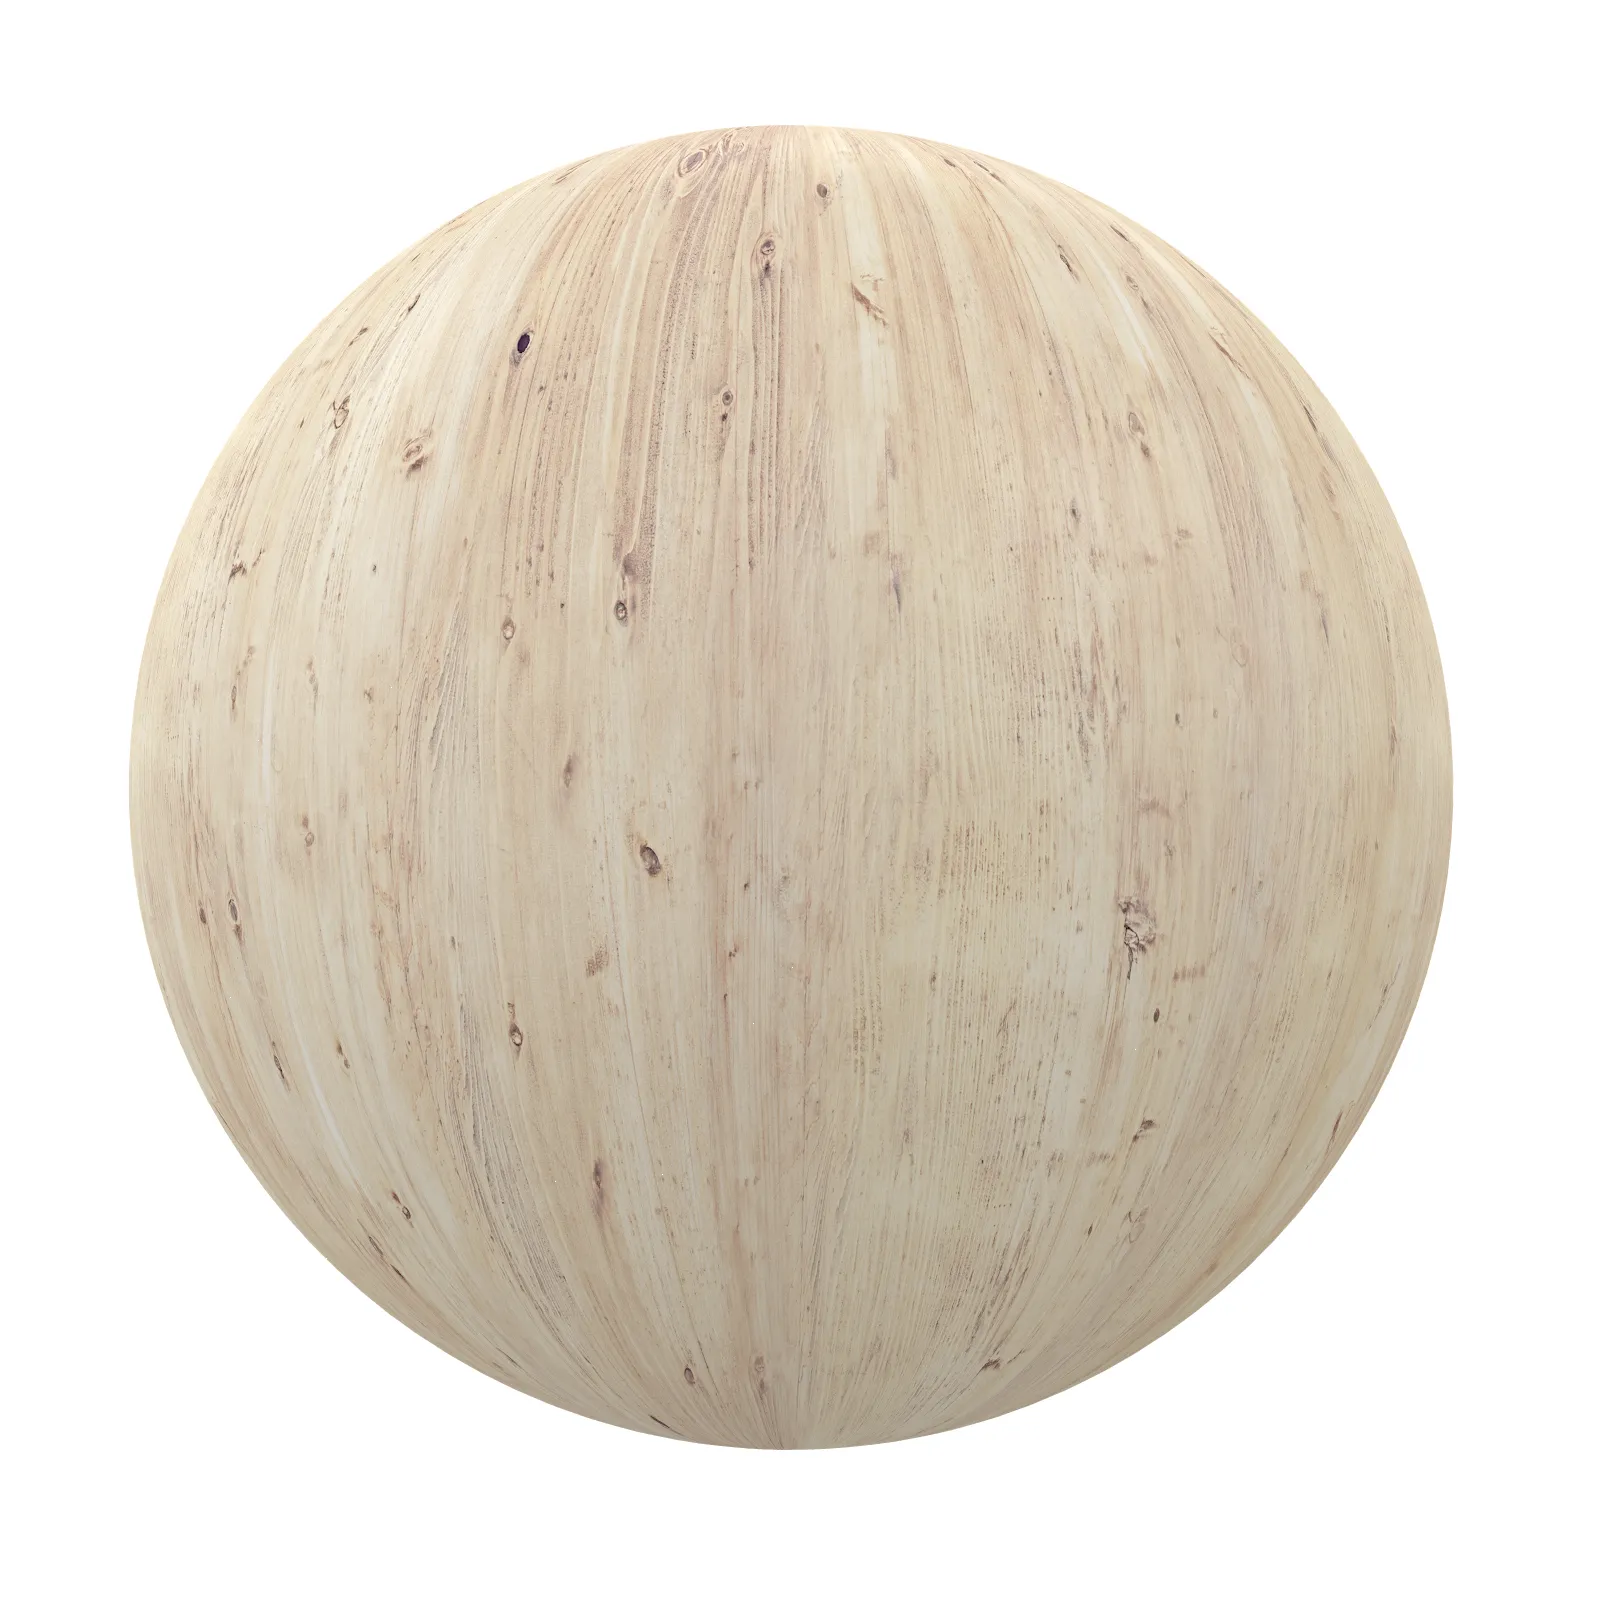 3ds Max Files – Texture – 8 – Wood Texture – 100 – Wood Texture by Minh Nguyen